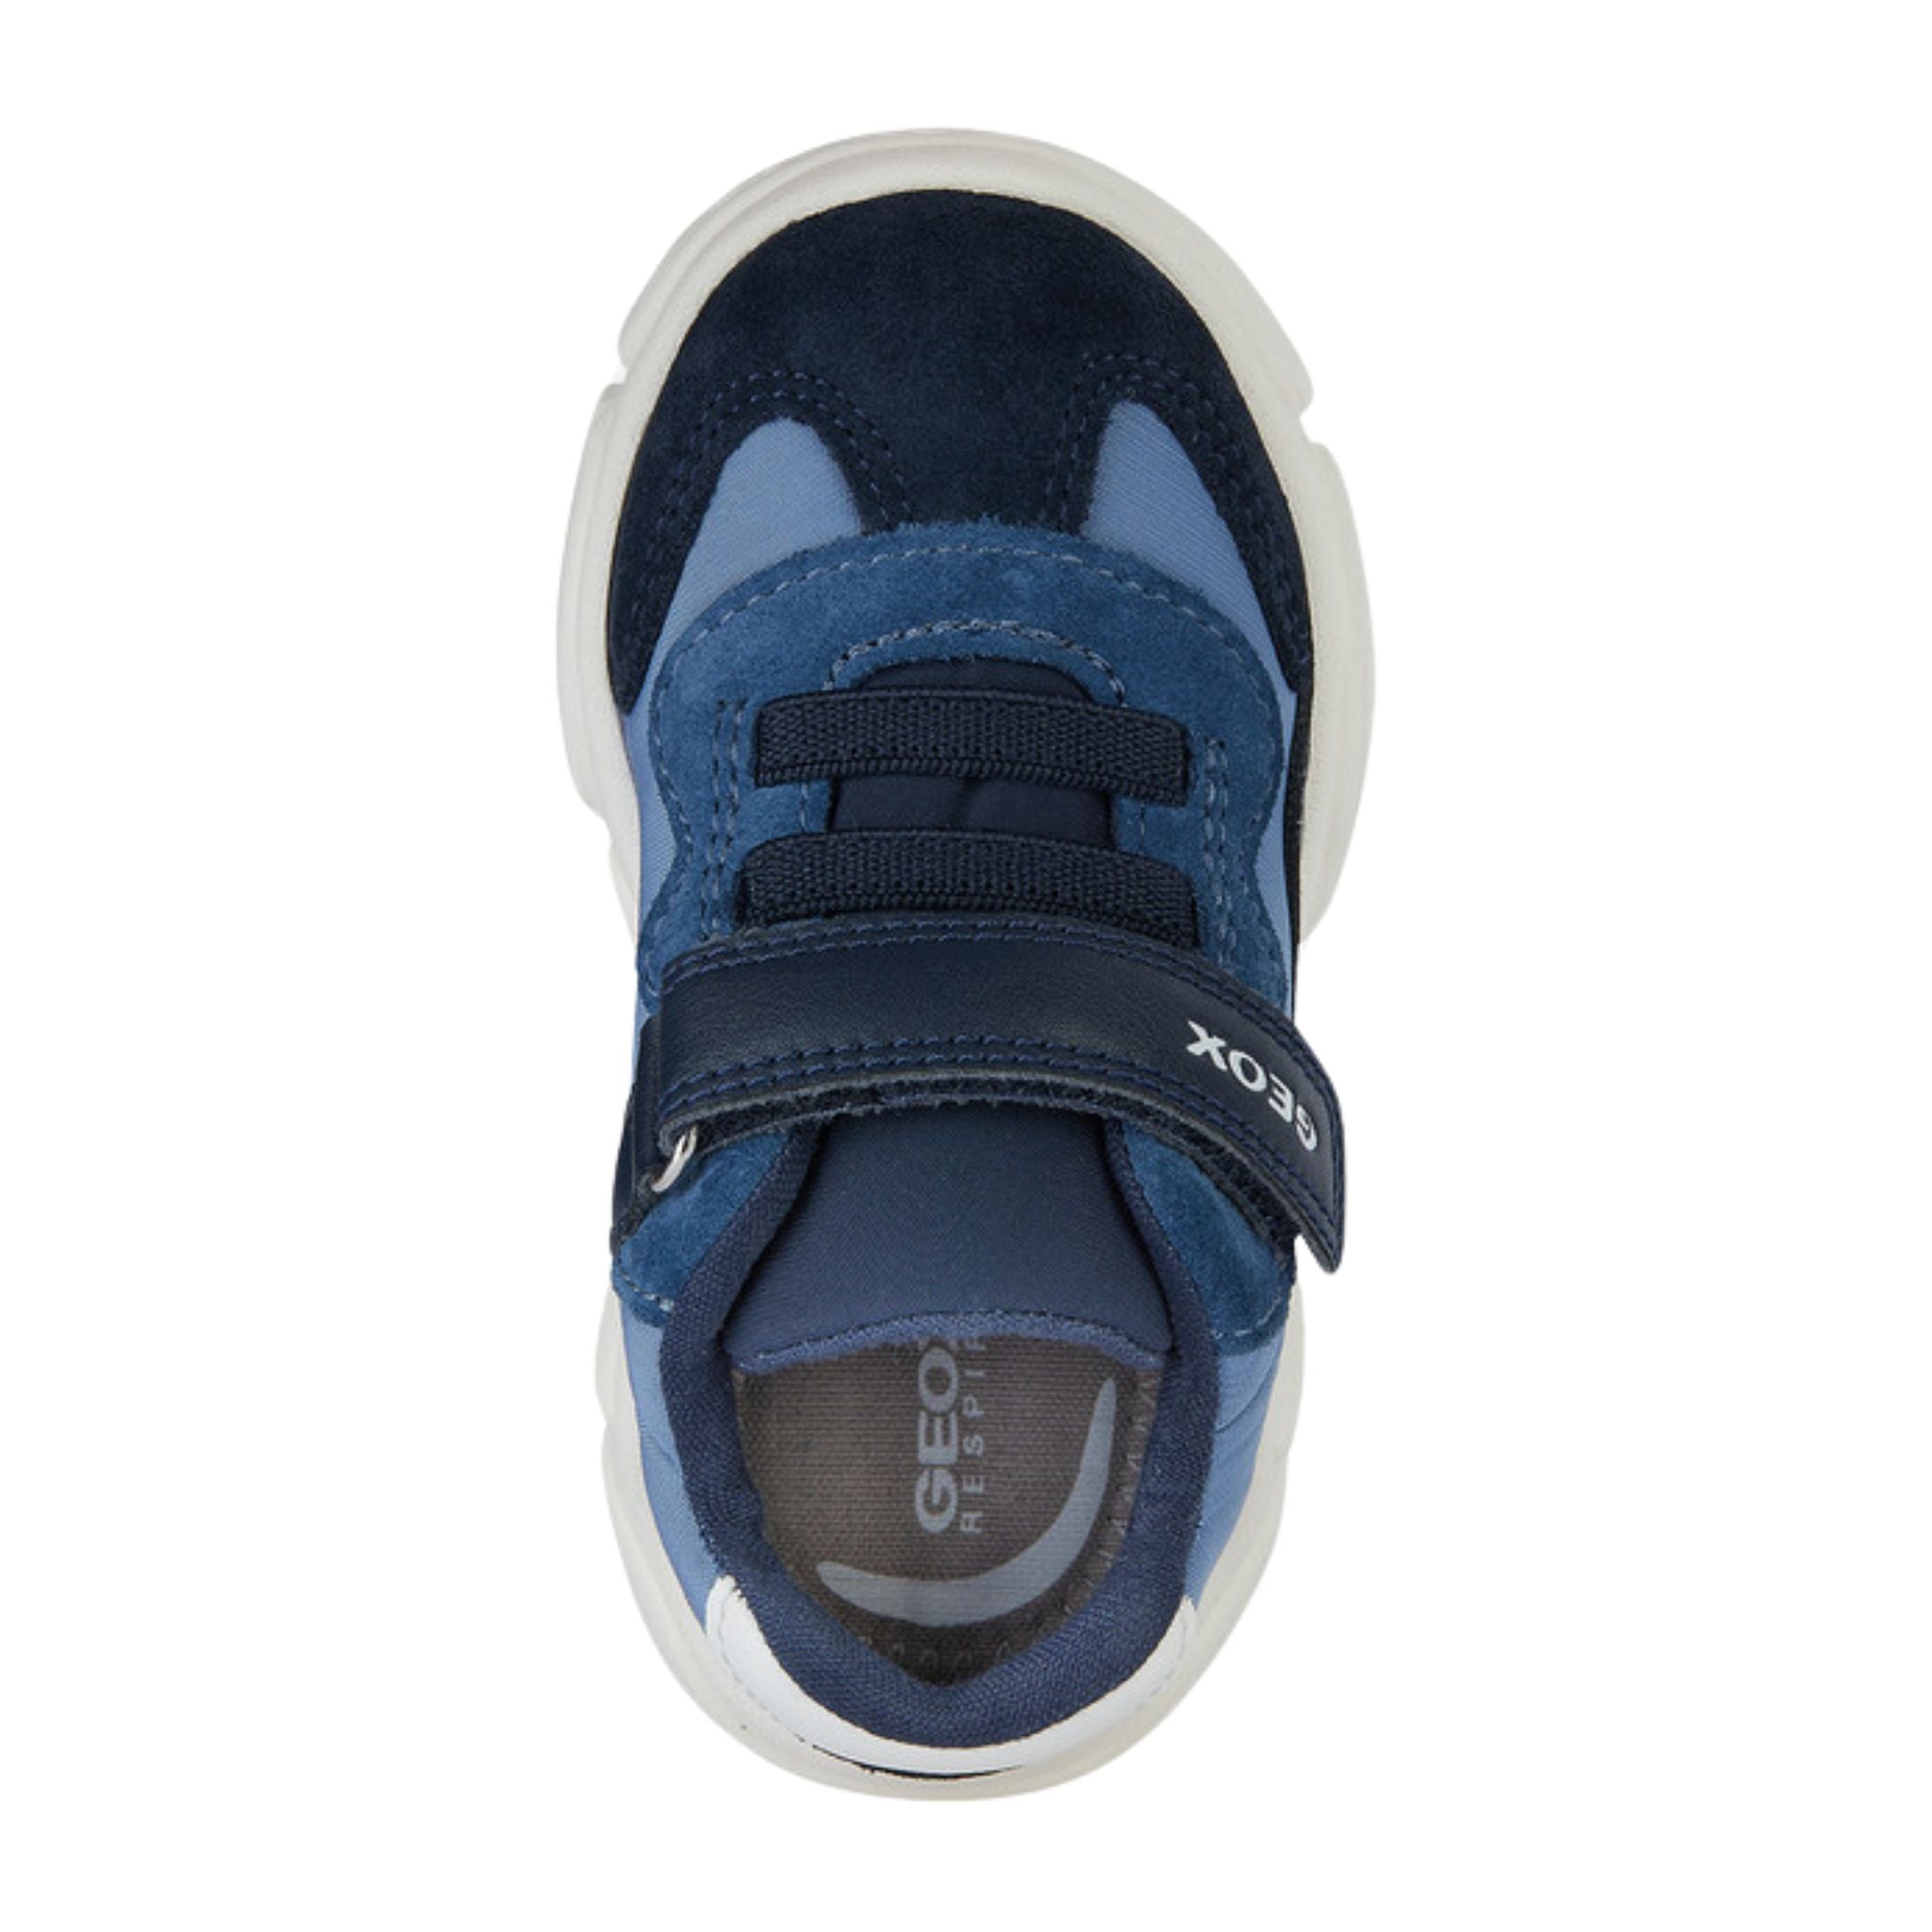 Geox Baby Boy Ciufciuf Blue Sneakers